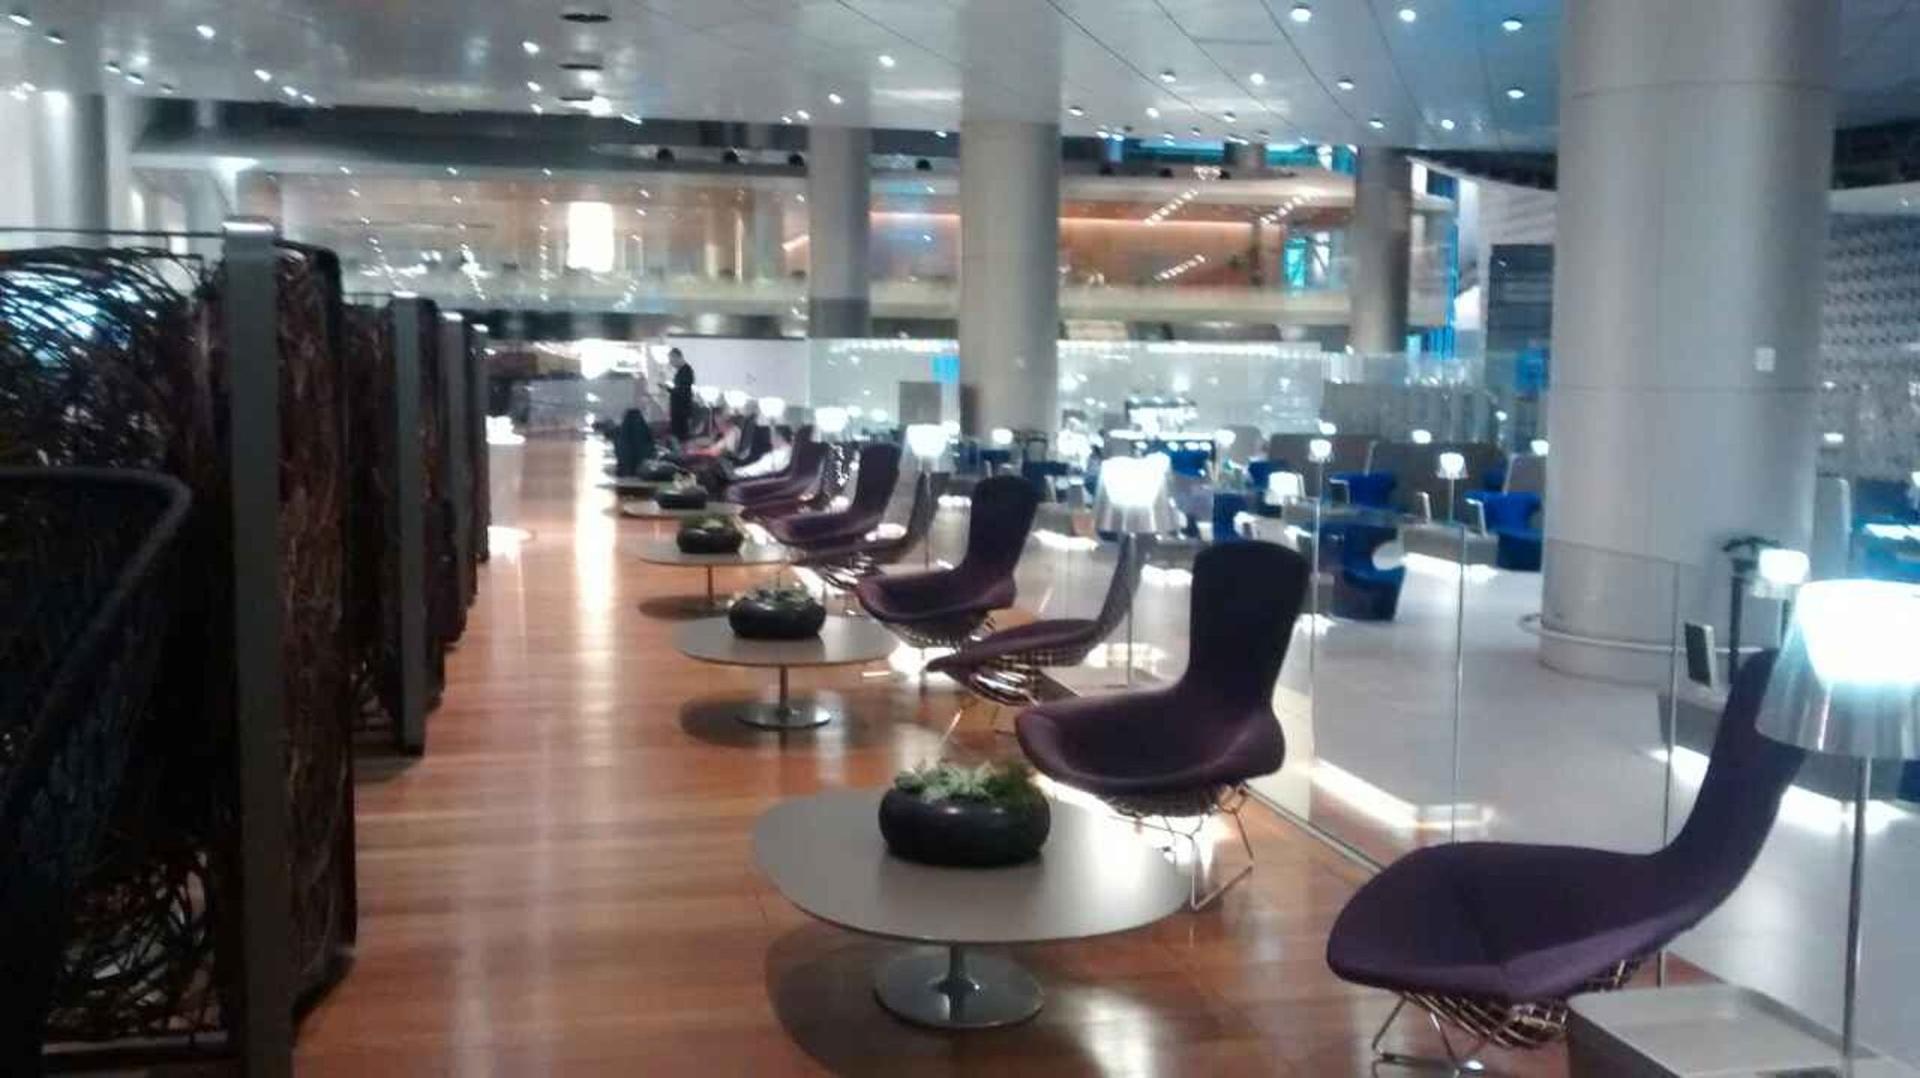 Qatar Airways Al Mourjan Business Class Lounge image 15 of 100